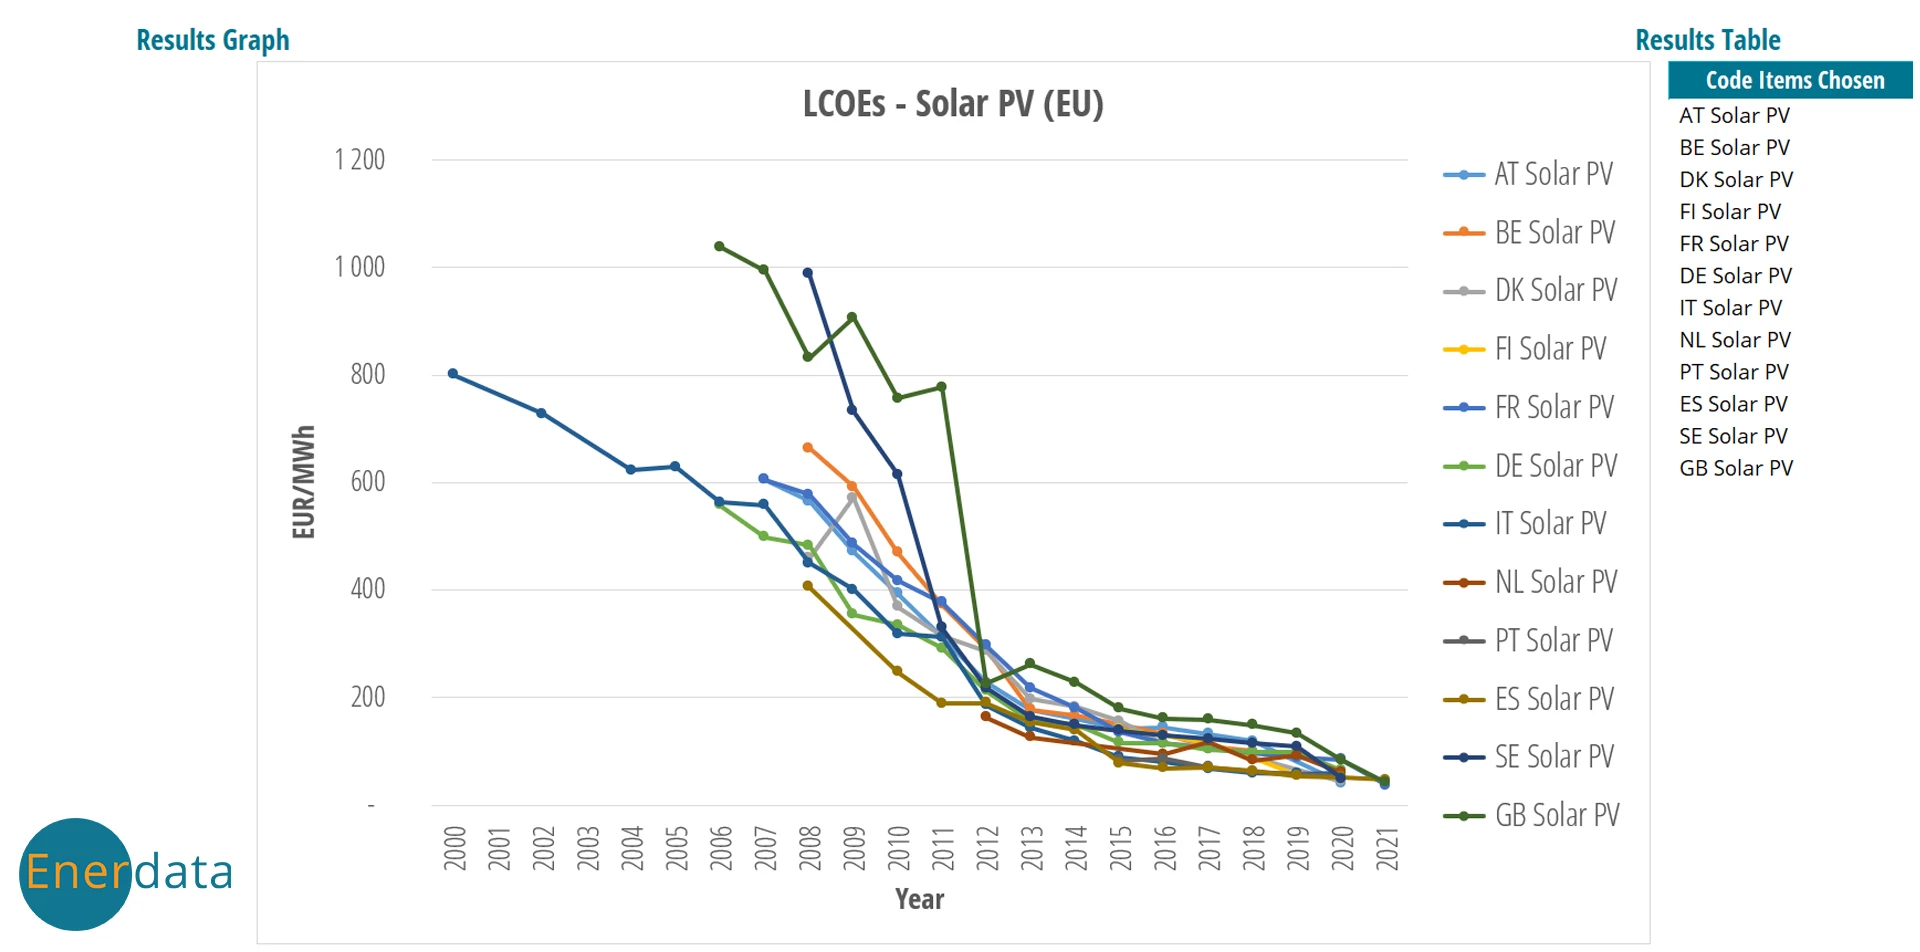 LCOE - Solar PV